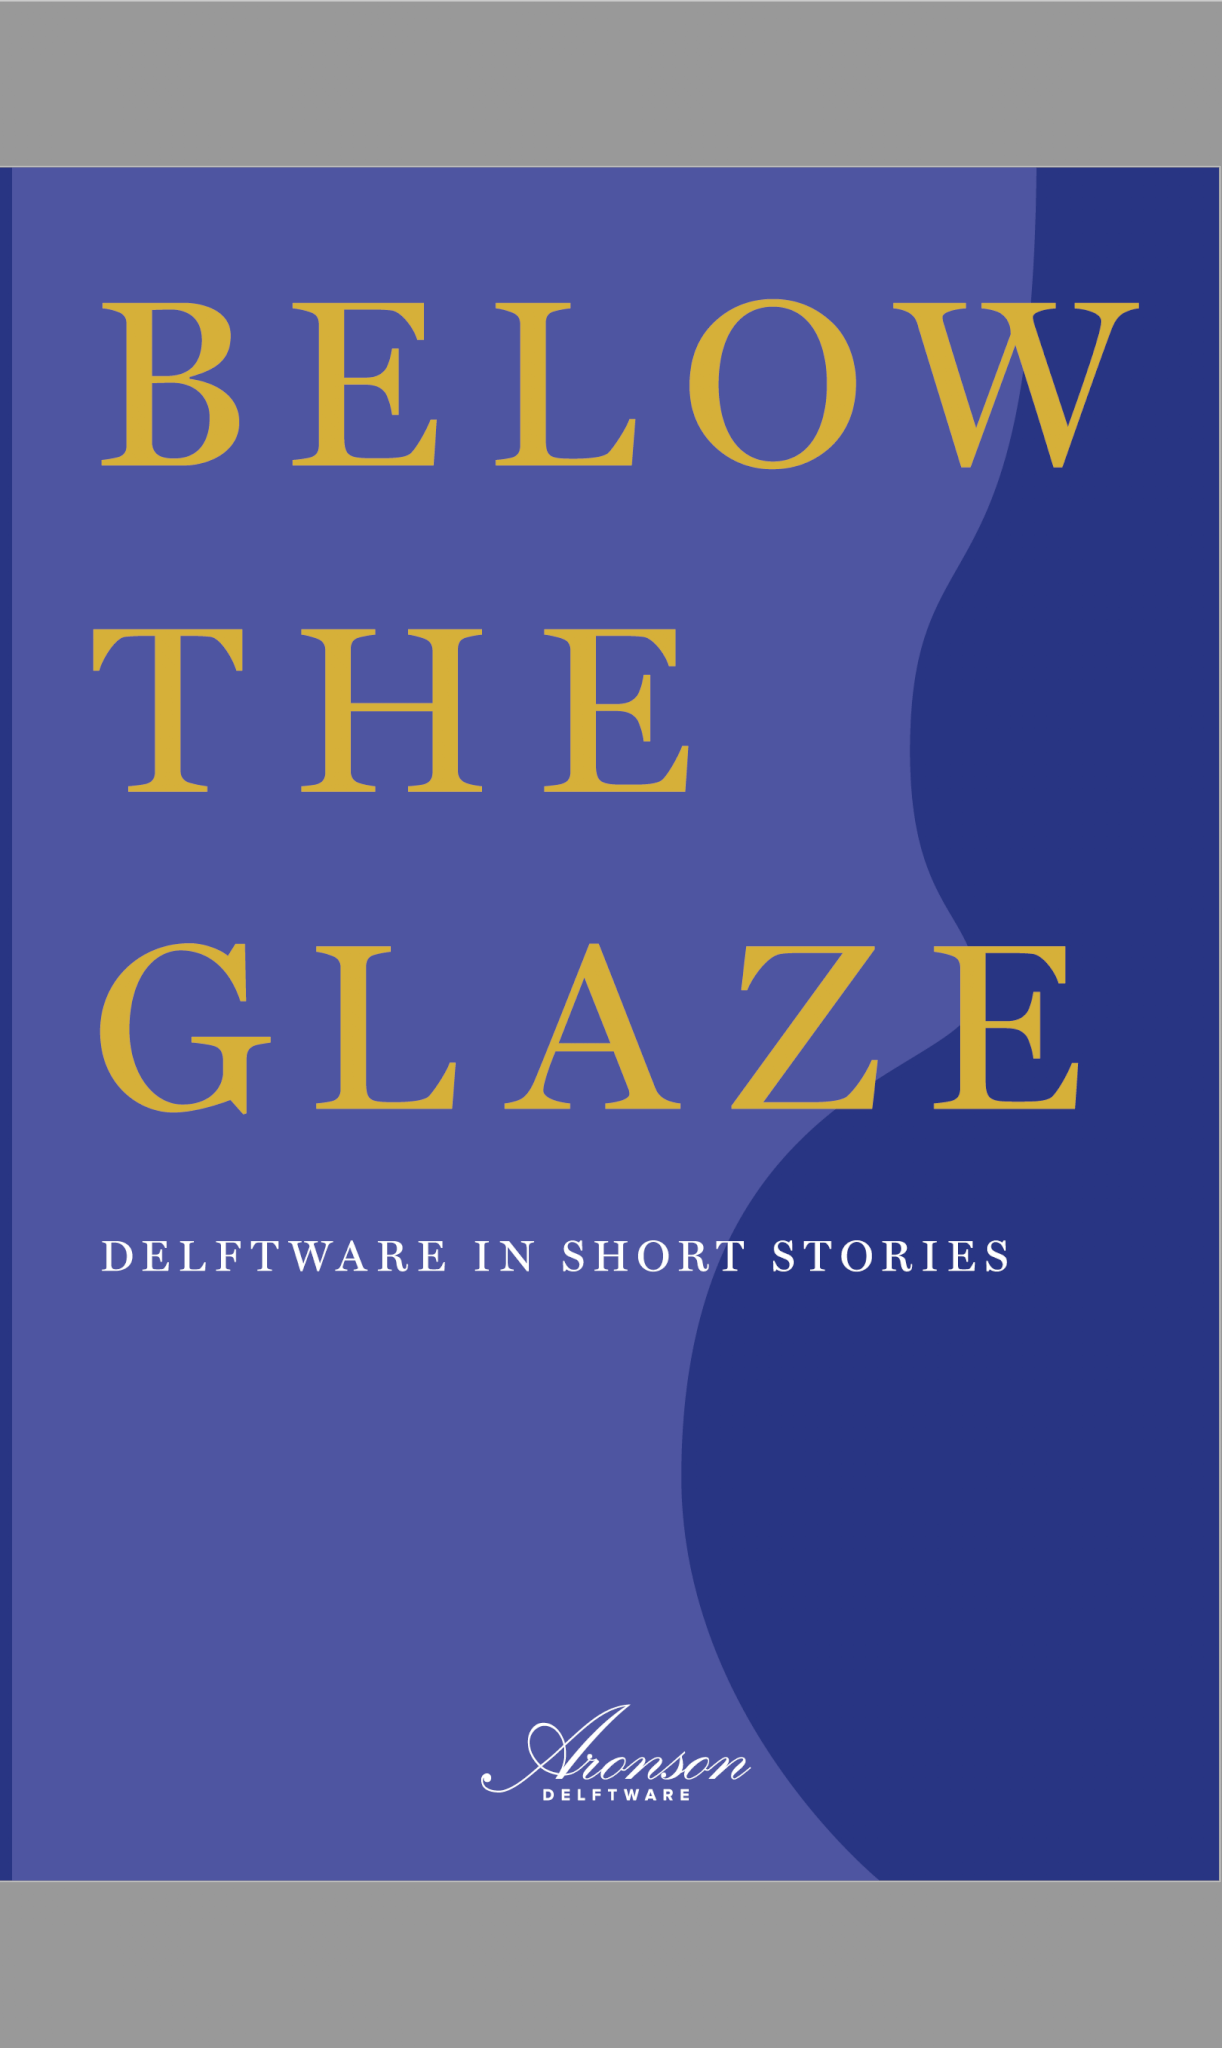 Cover book Below the Glaze. Delftware in short stories